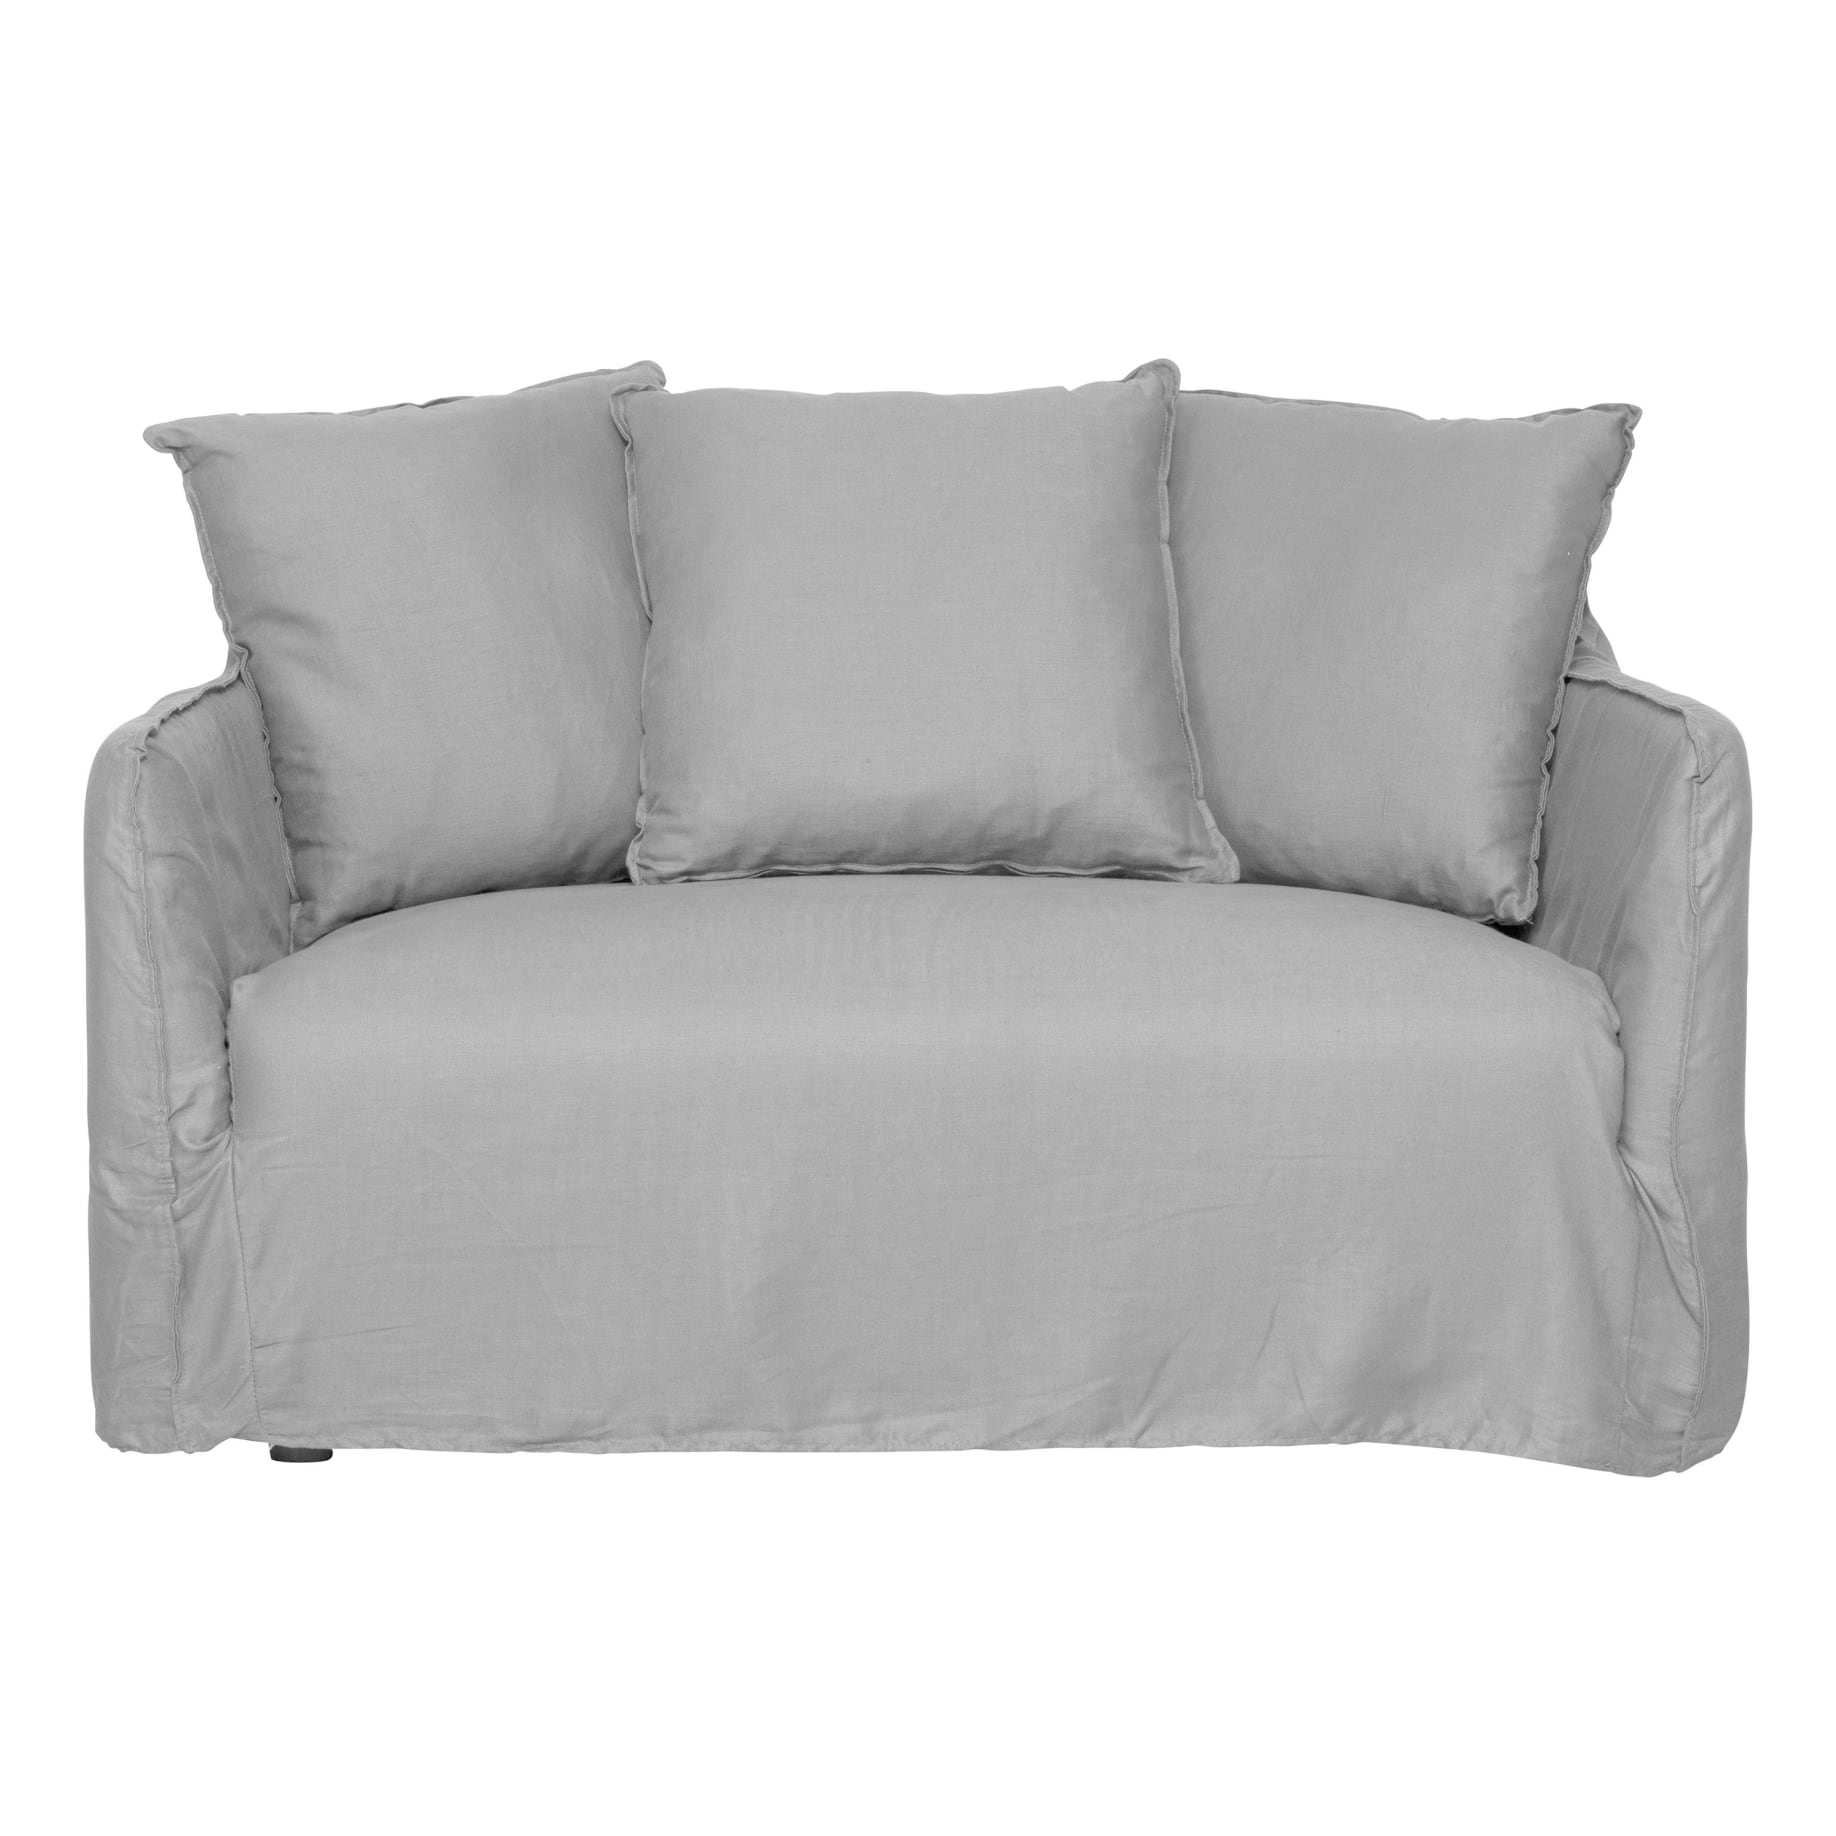 Whitehaven 1.5 Seater Sofa in Skye Light Grey